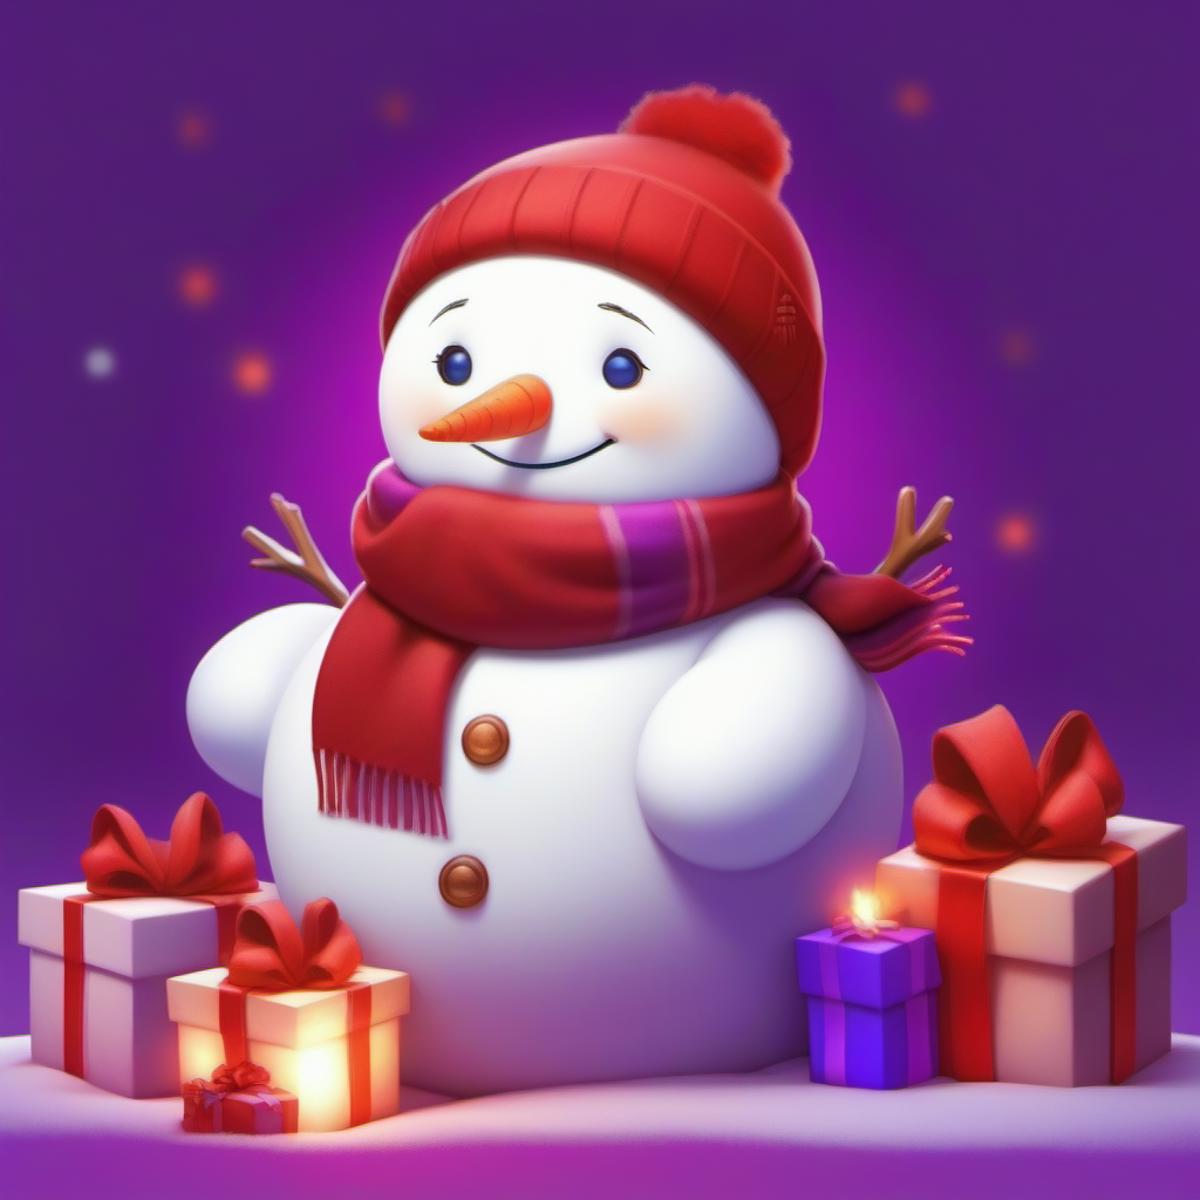 Christmas theme_snowman_SE | 圣诞节主题_雪人_思恩 image by xusien